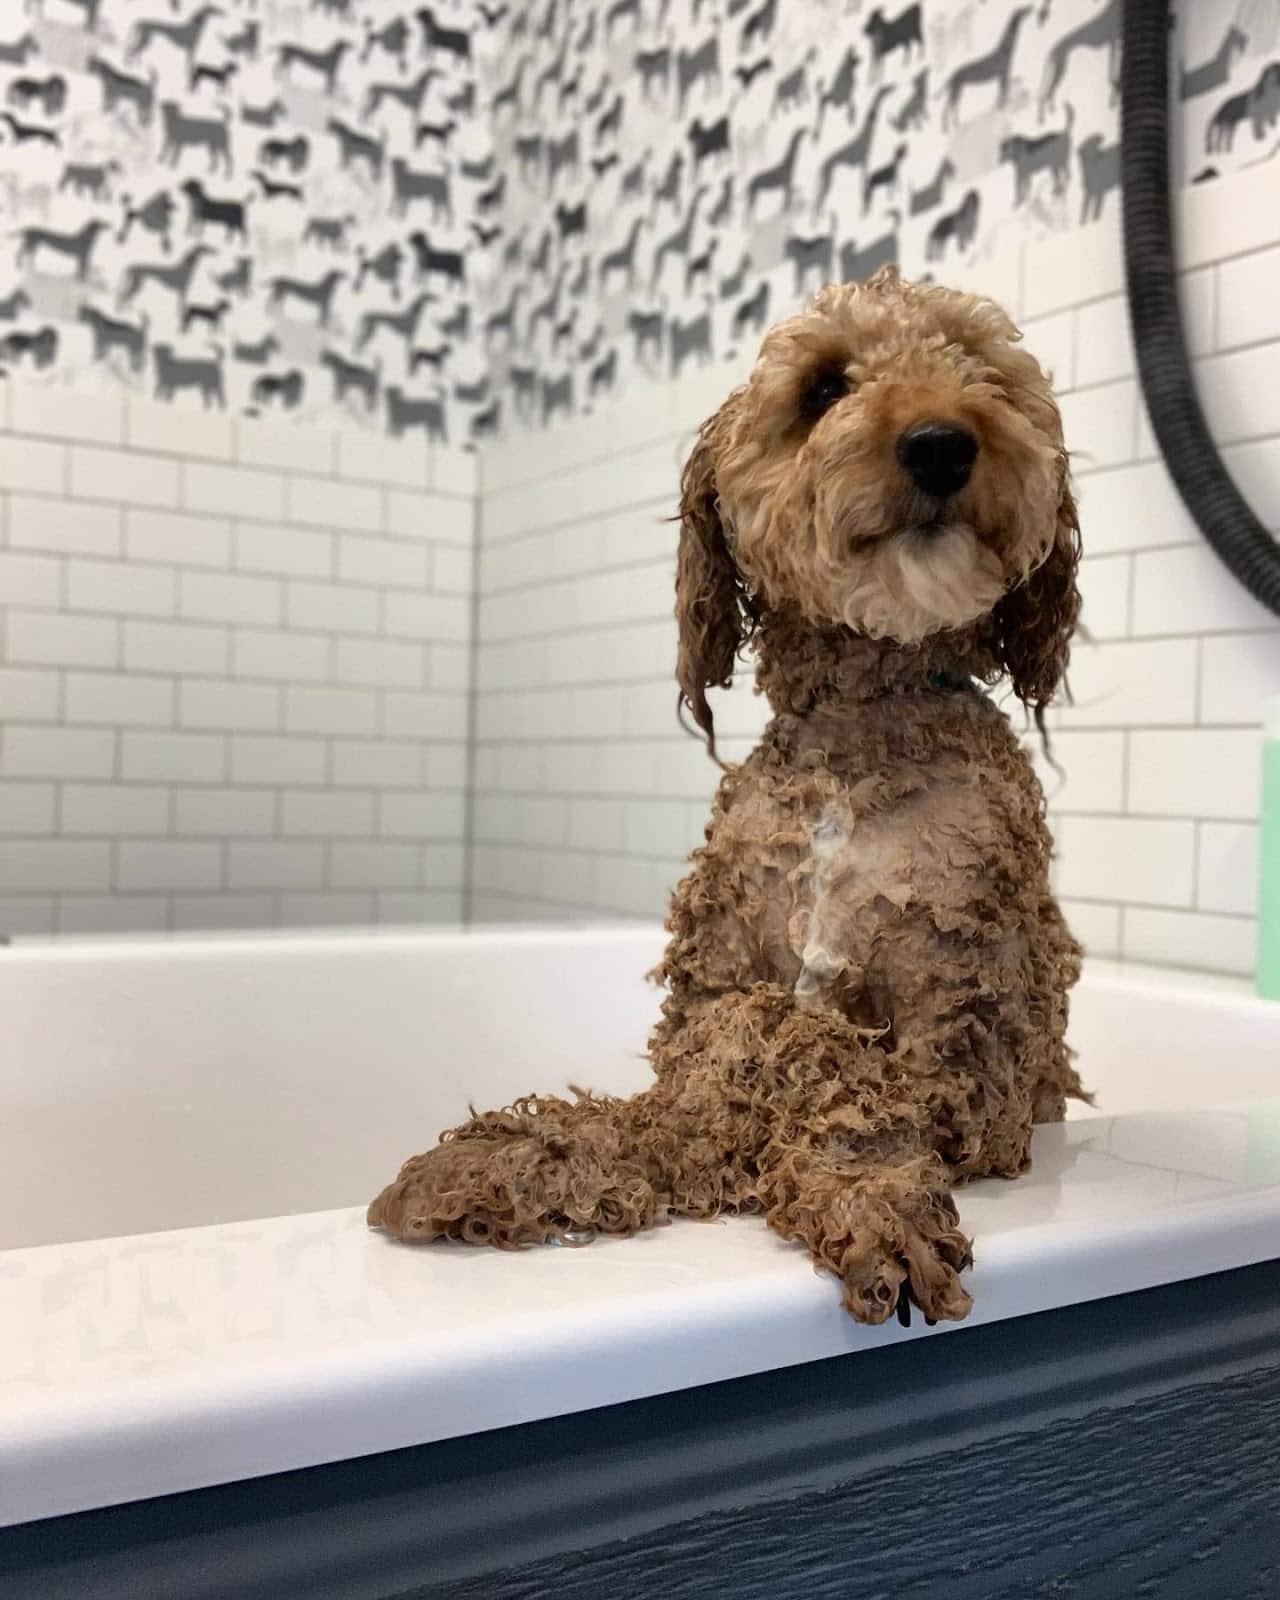 Bath time for dog